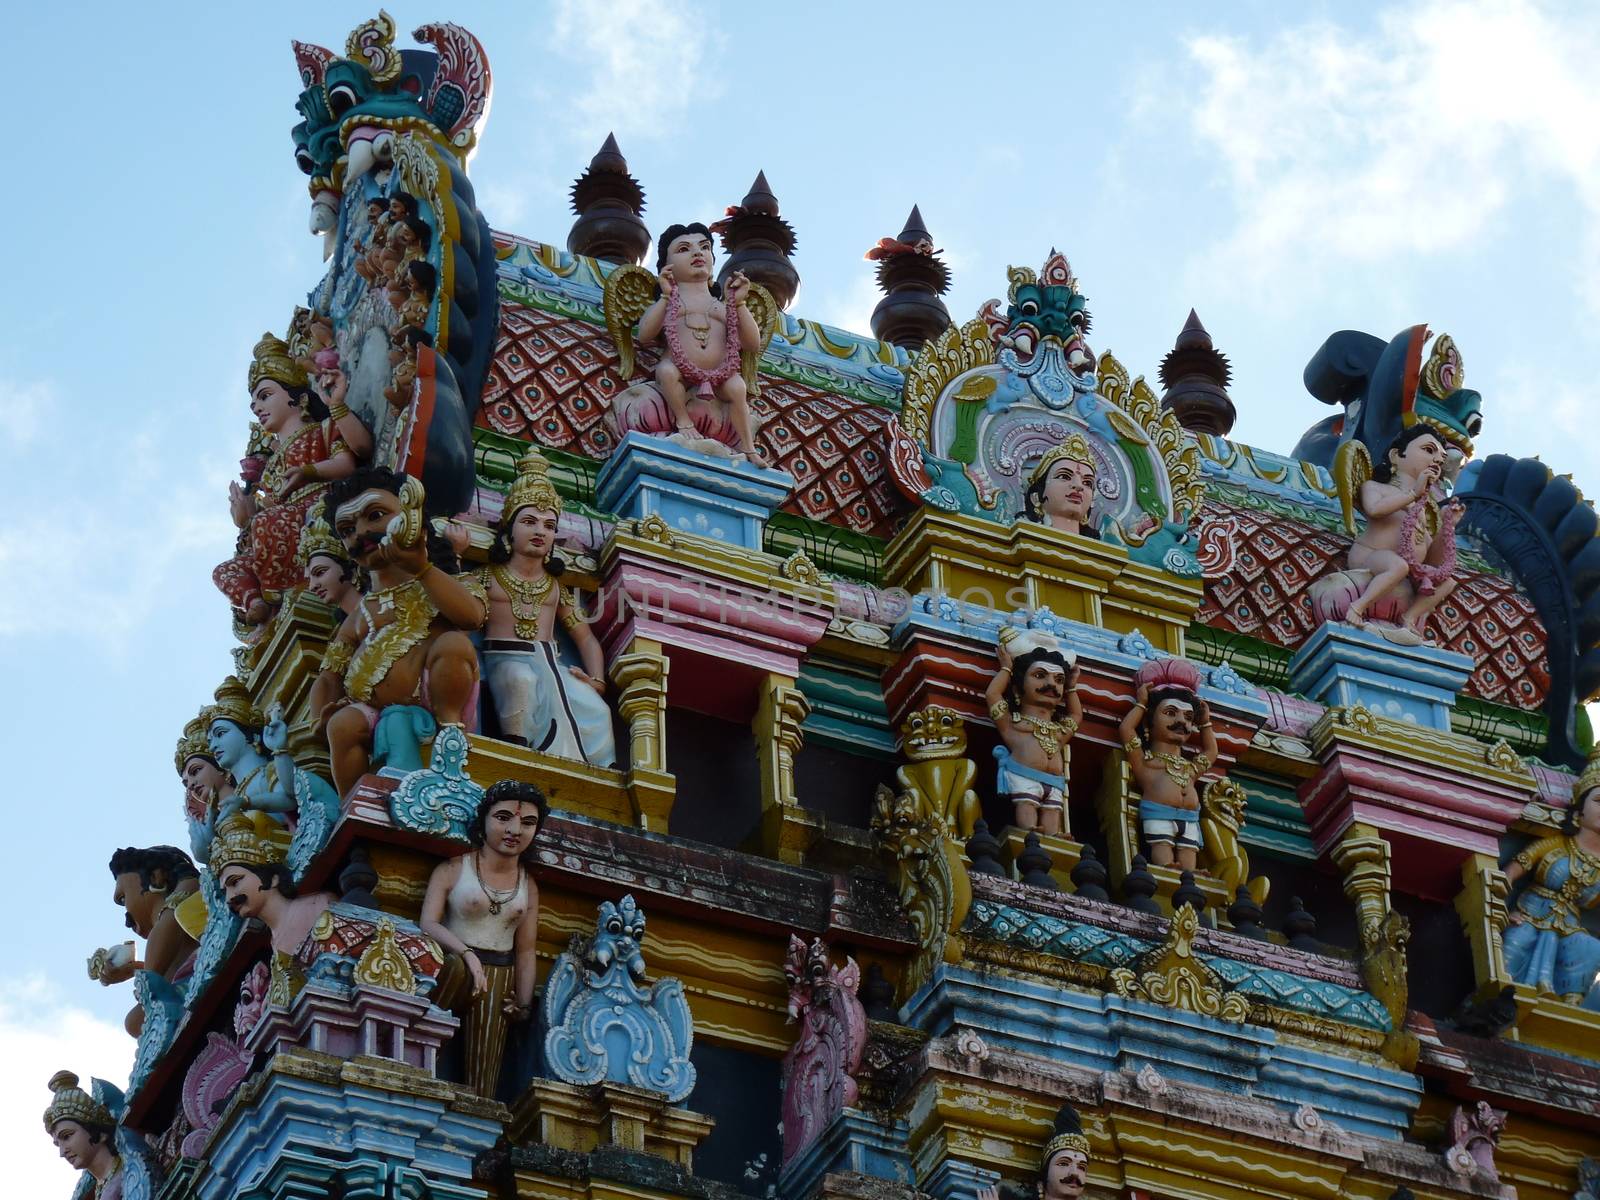 Tamil Surya Oudaya Sangam Temple by nicousnake